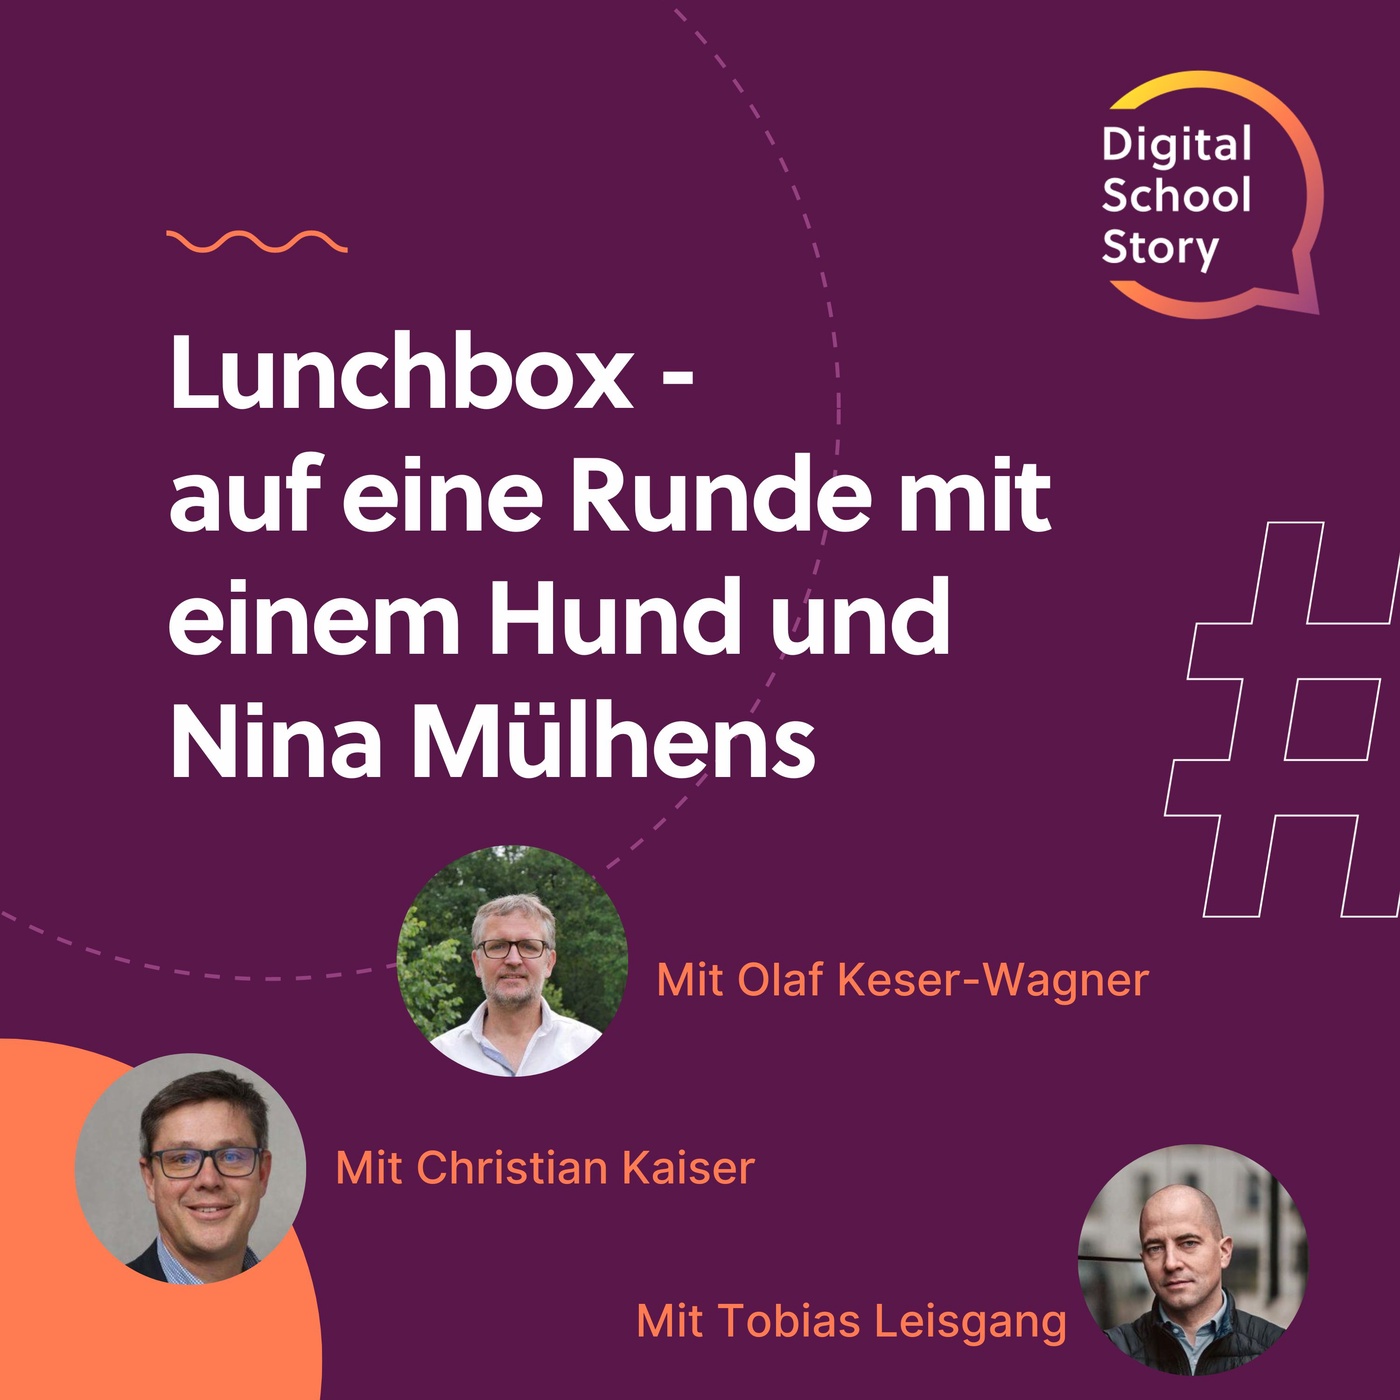 #27 Christian Kaiser, Olaf  Keser-Wagner und Tobias Leisgang bei der #lunchbox